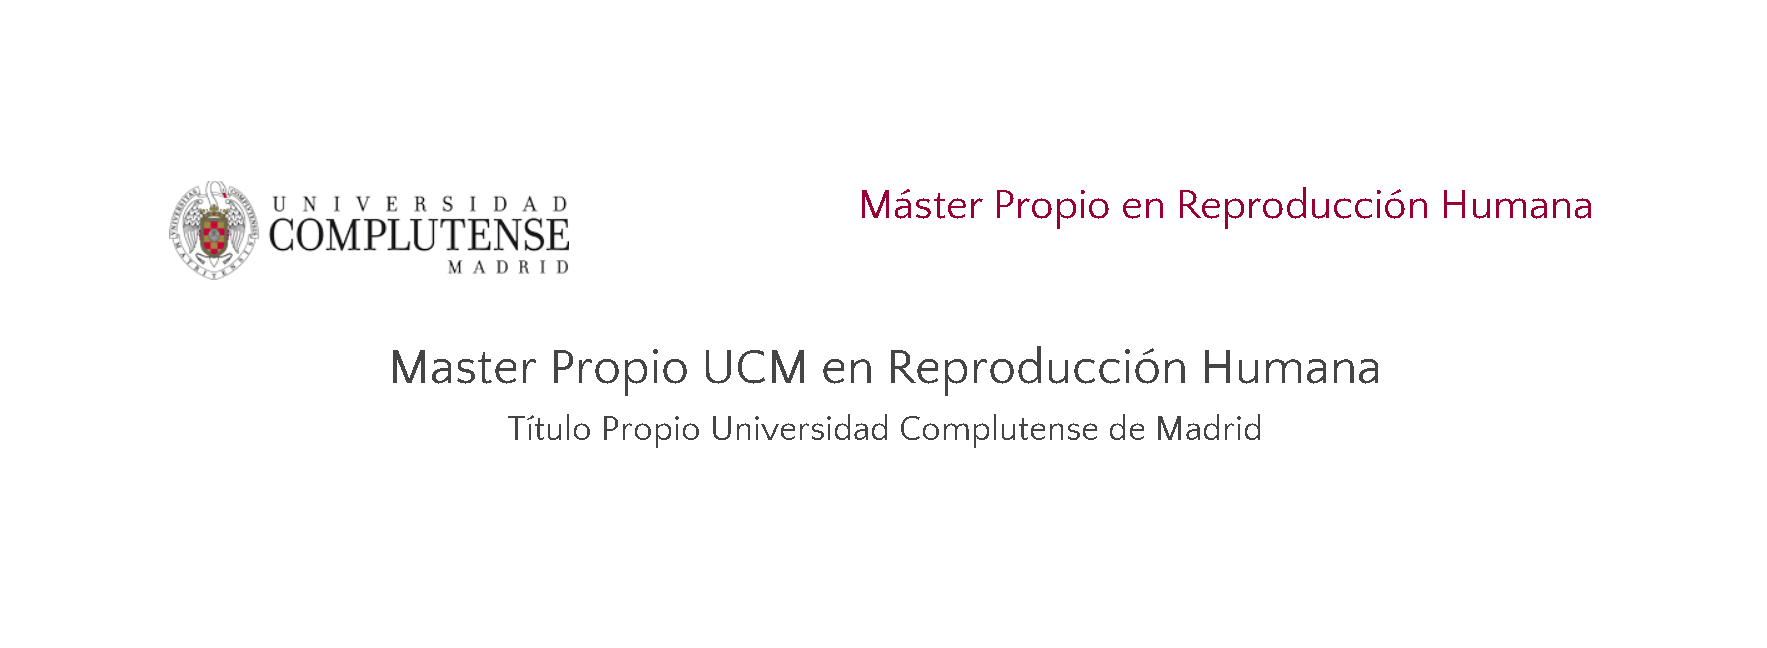 Master Propio UCM en Reproducción Humana